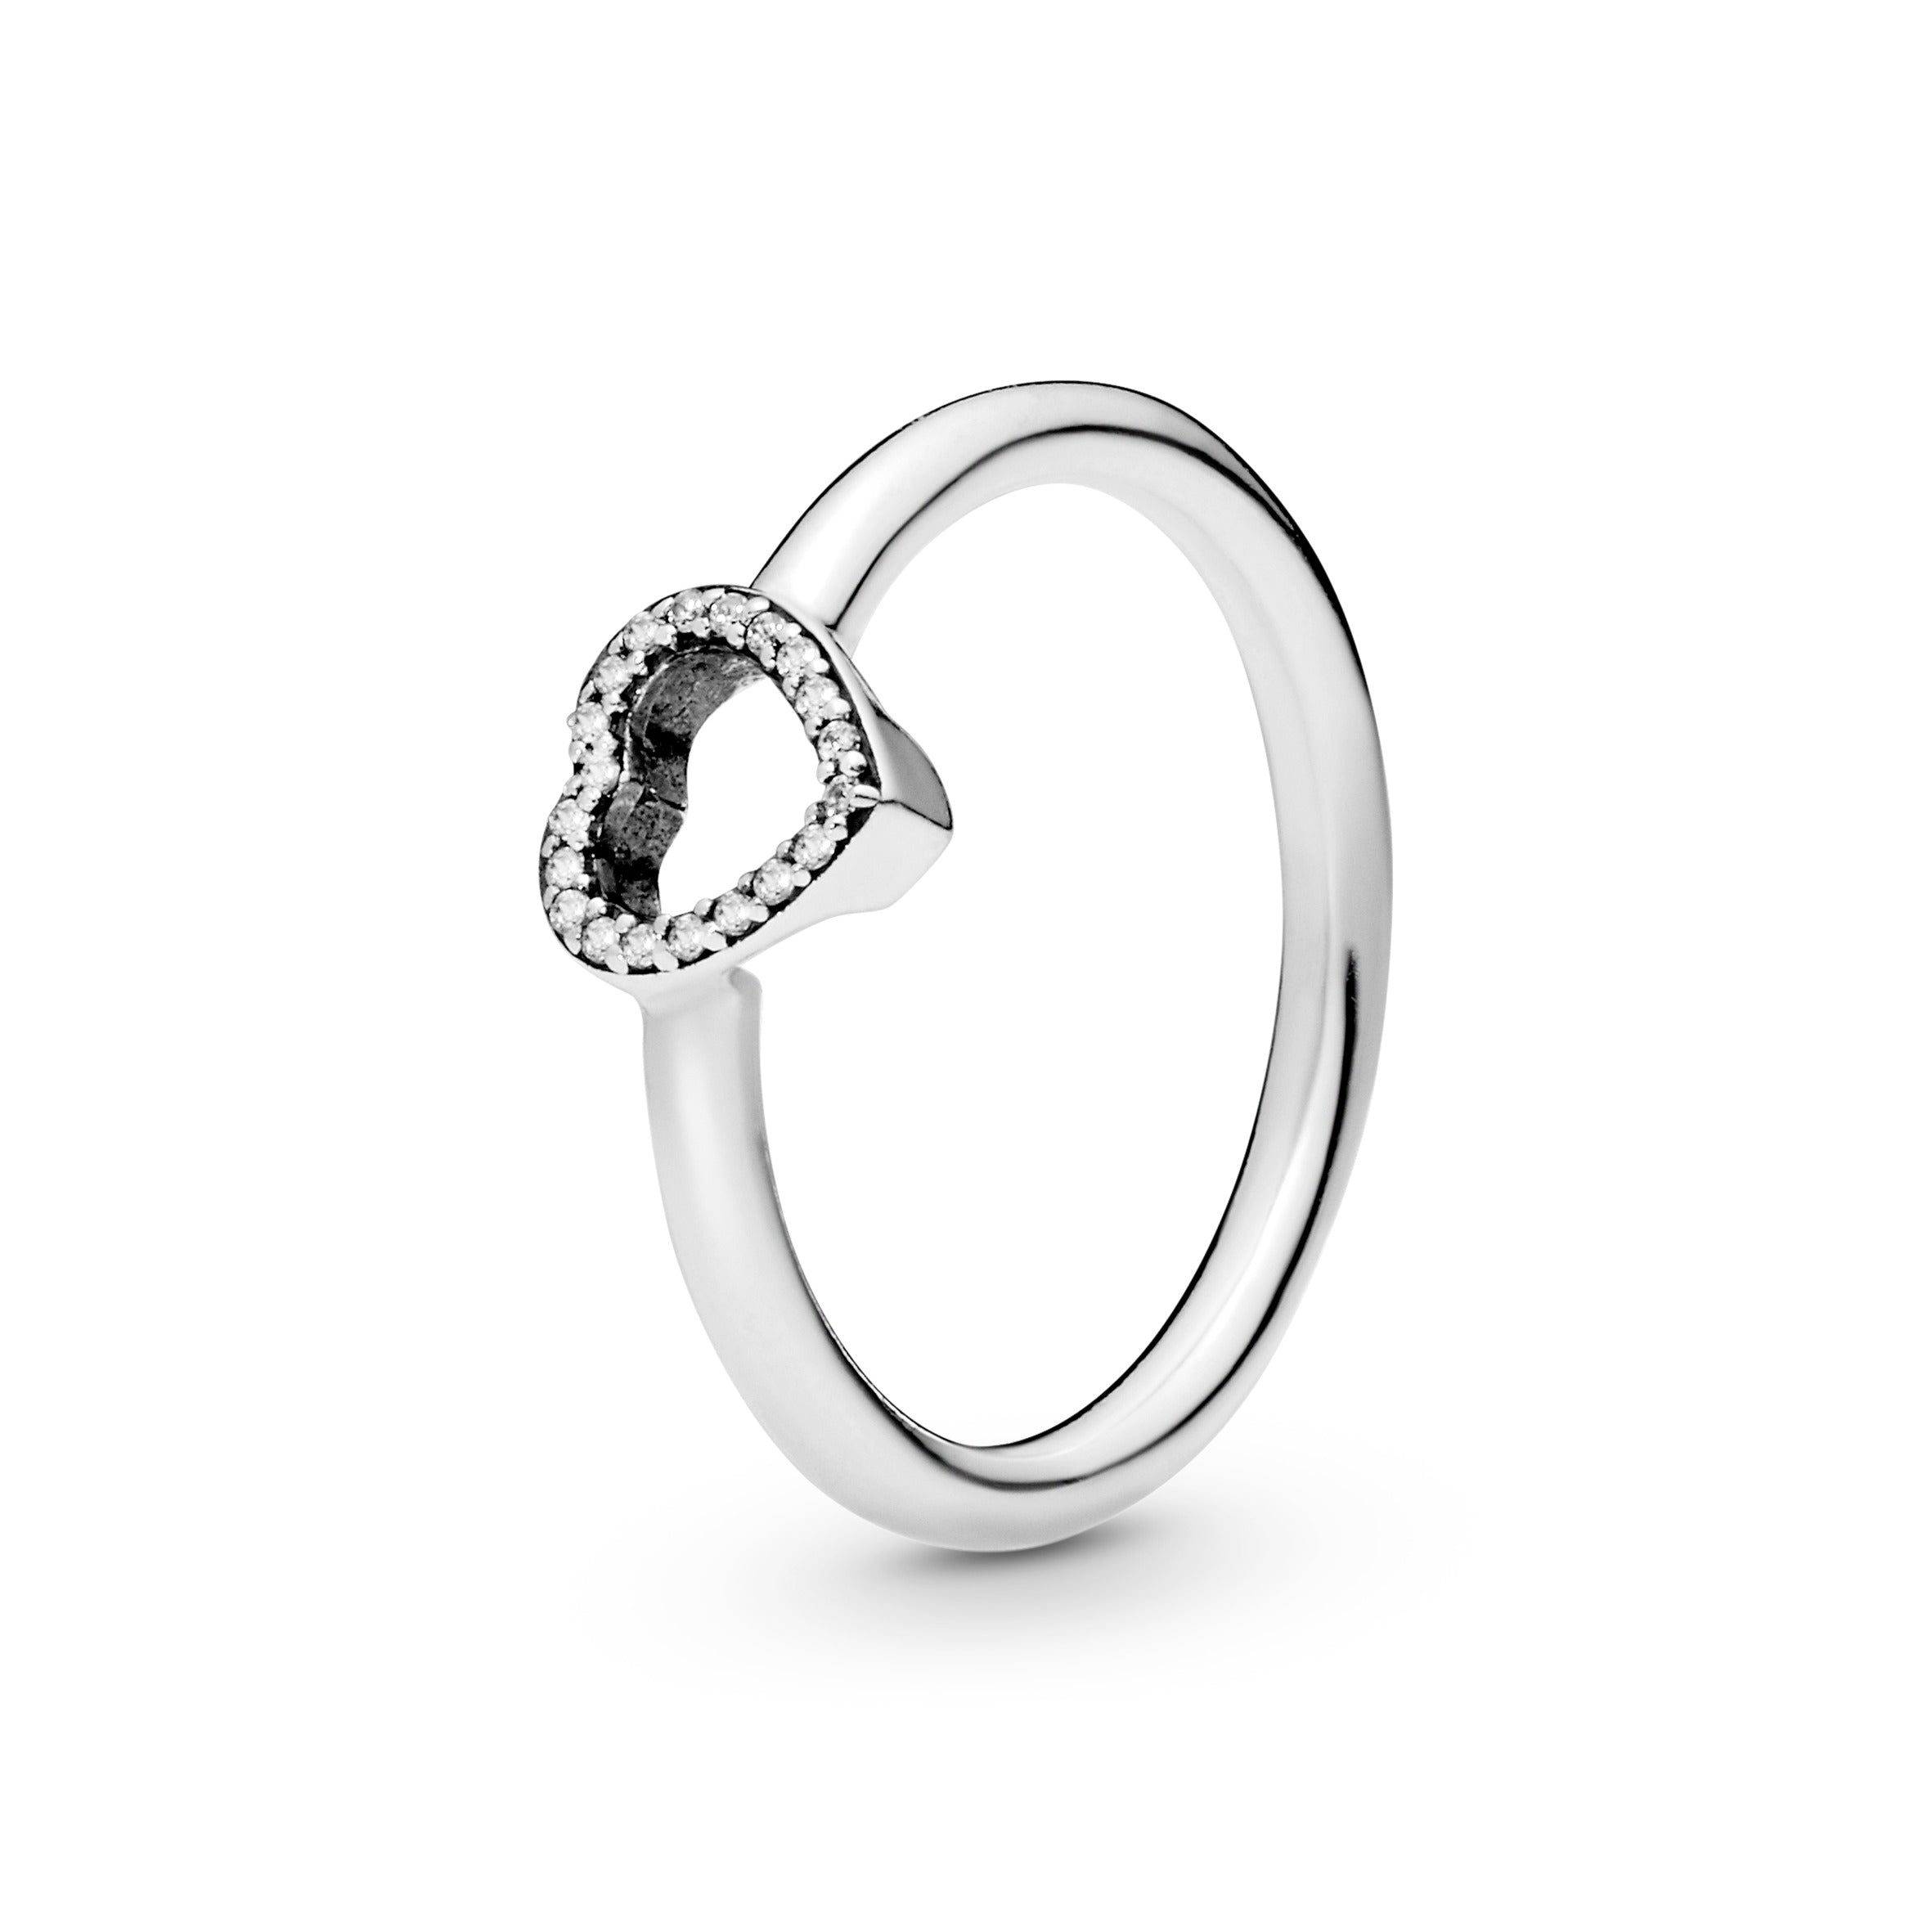 Heart silver ring with clear cubic zirconia – Pandora Jordan